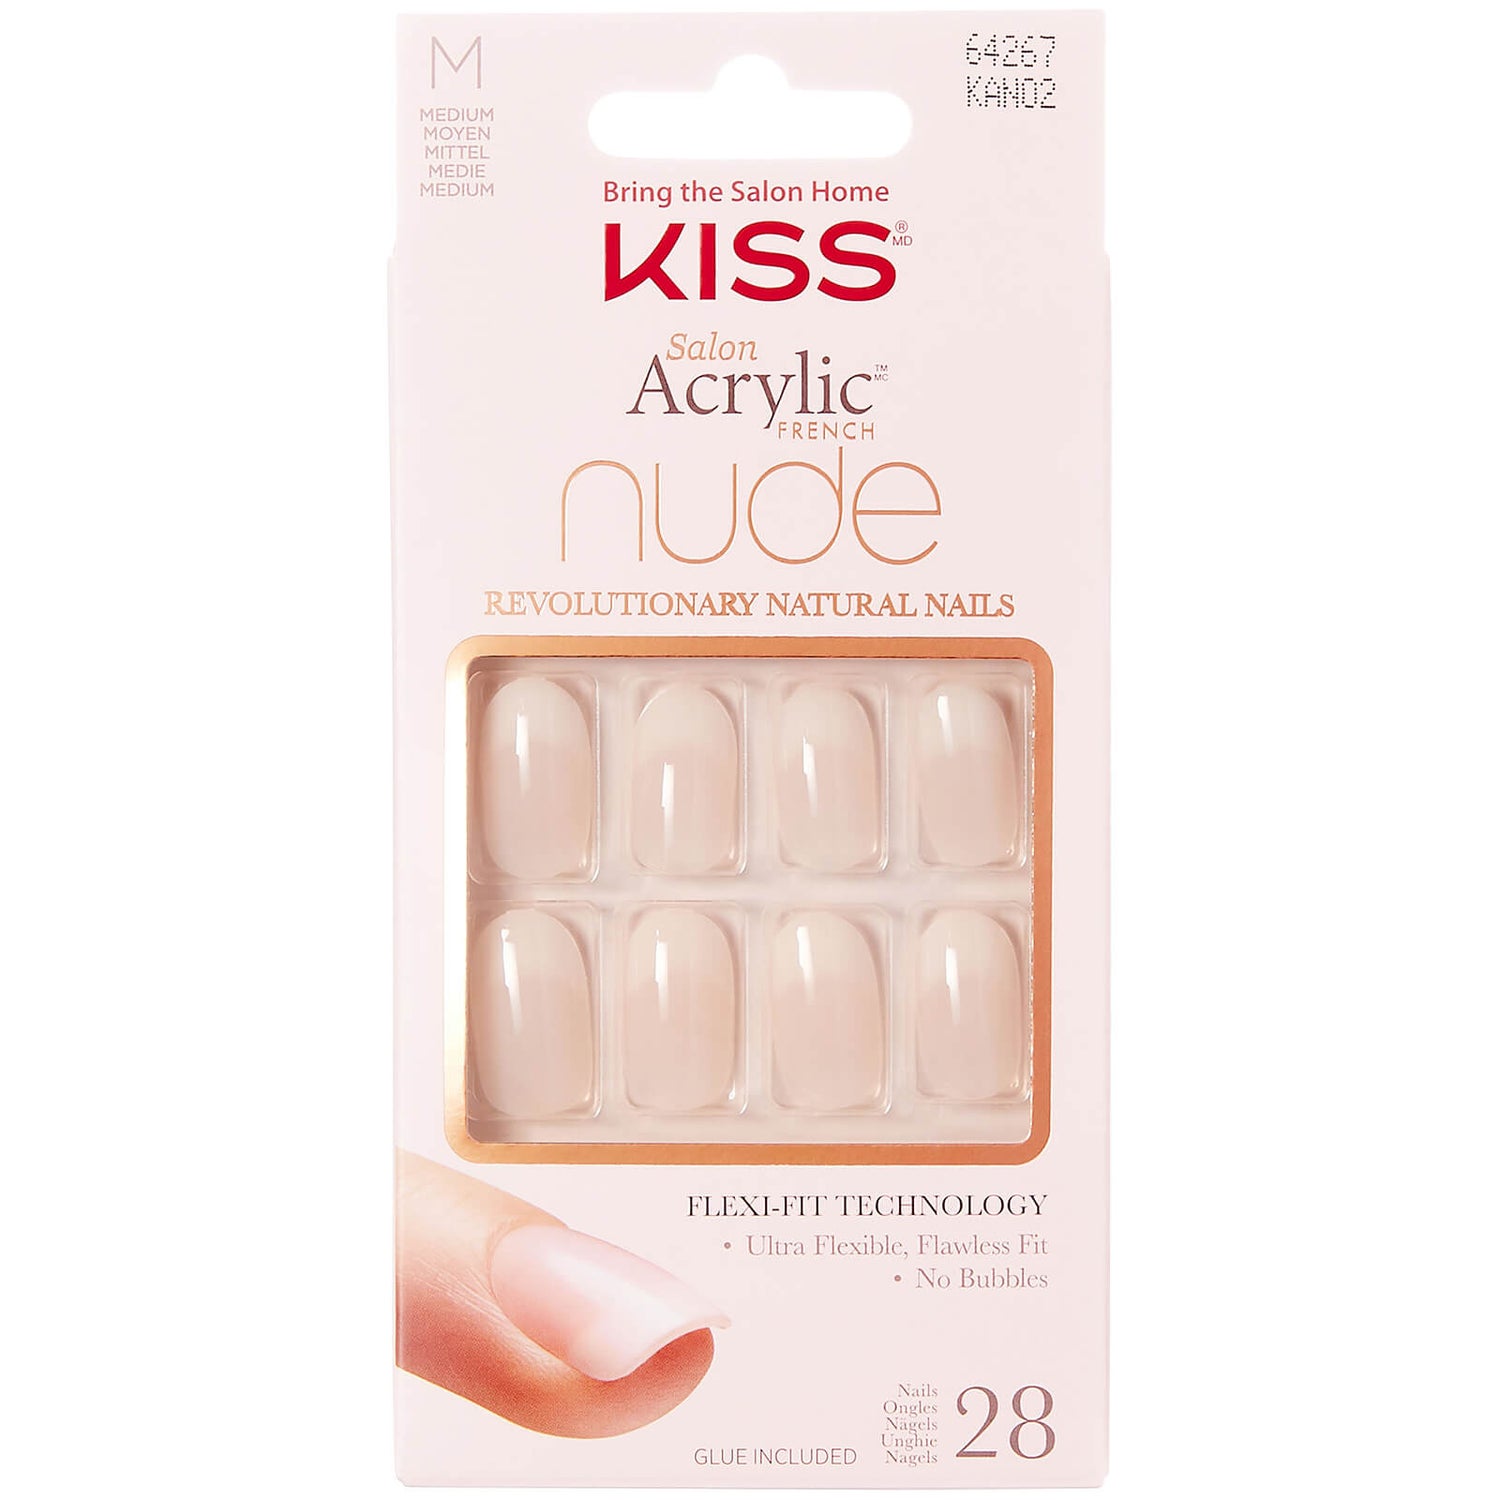 Kiss Salon Acrylic Nude Nails - Graceful